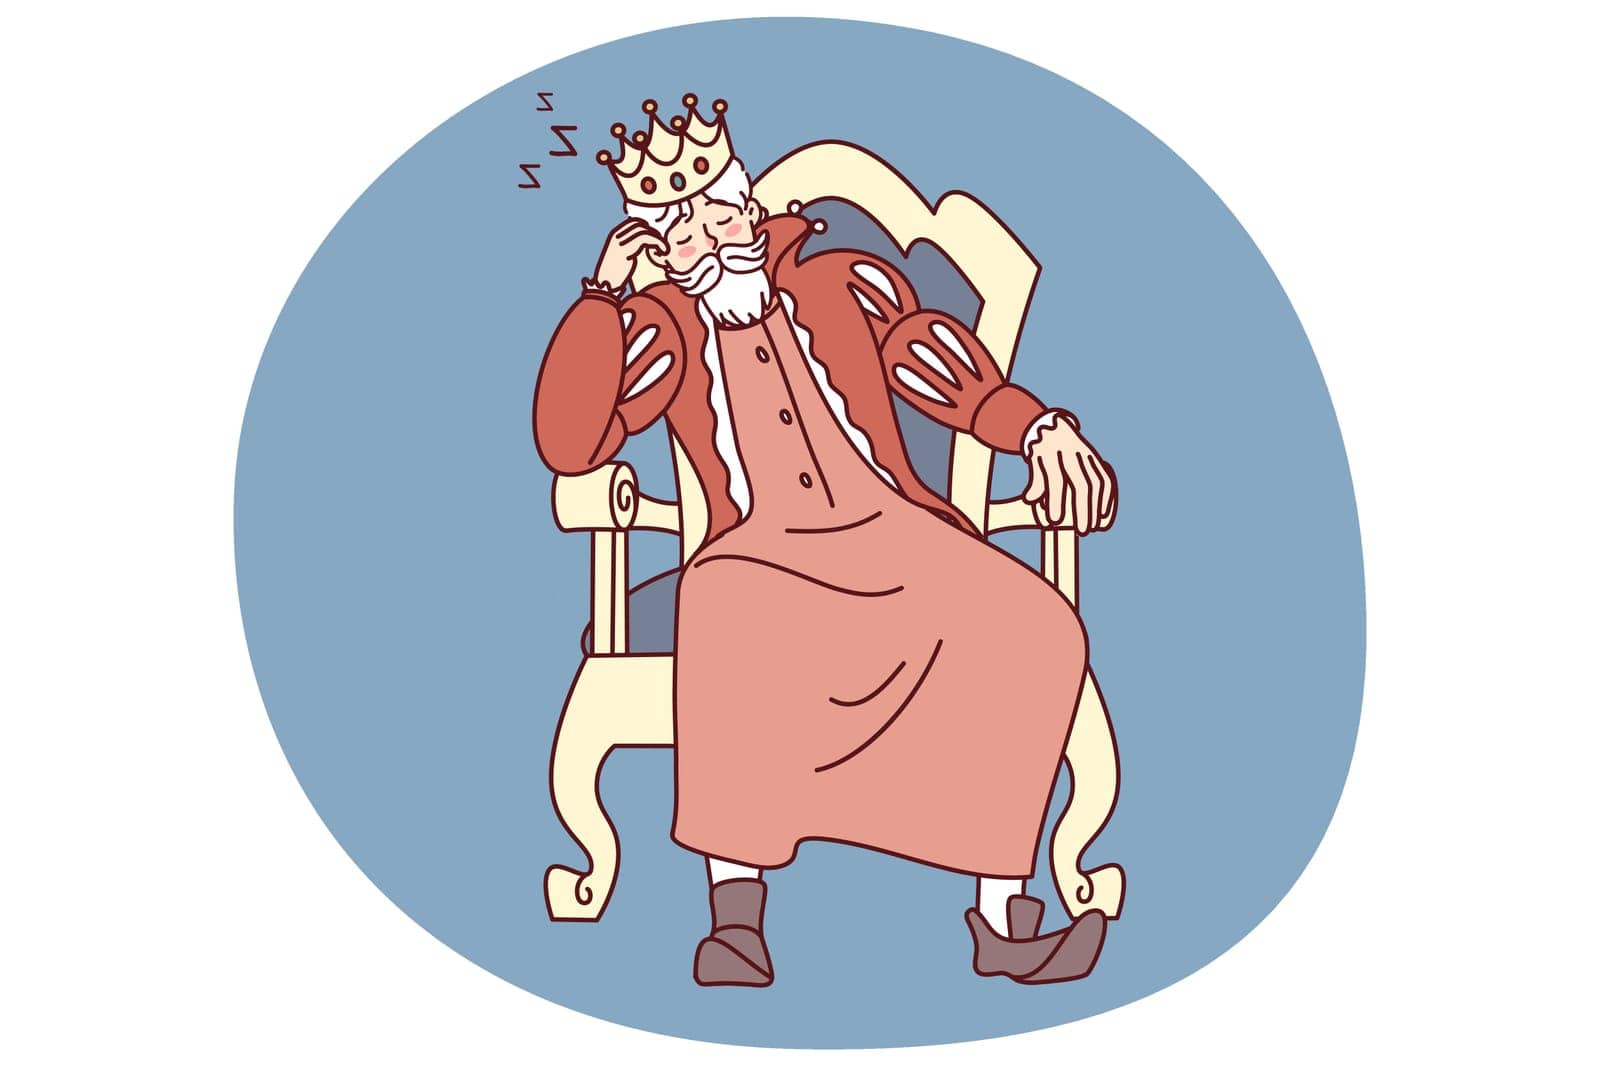 Bored king asleep in chair by Vasilyeva